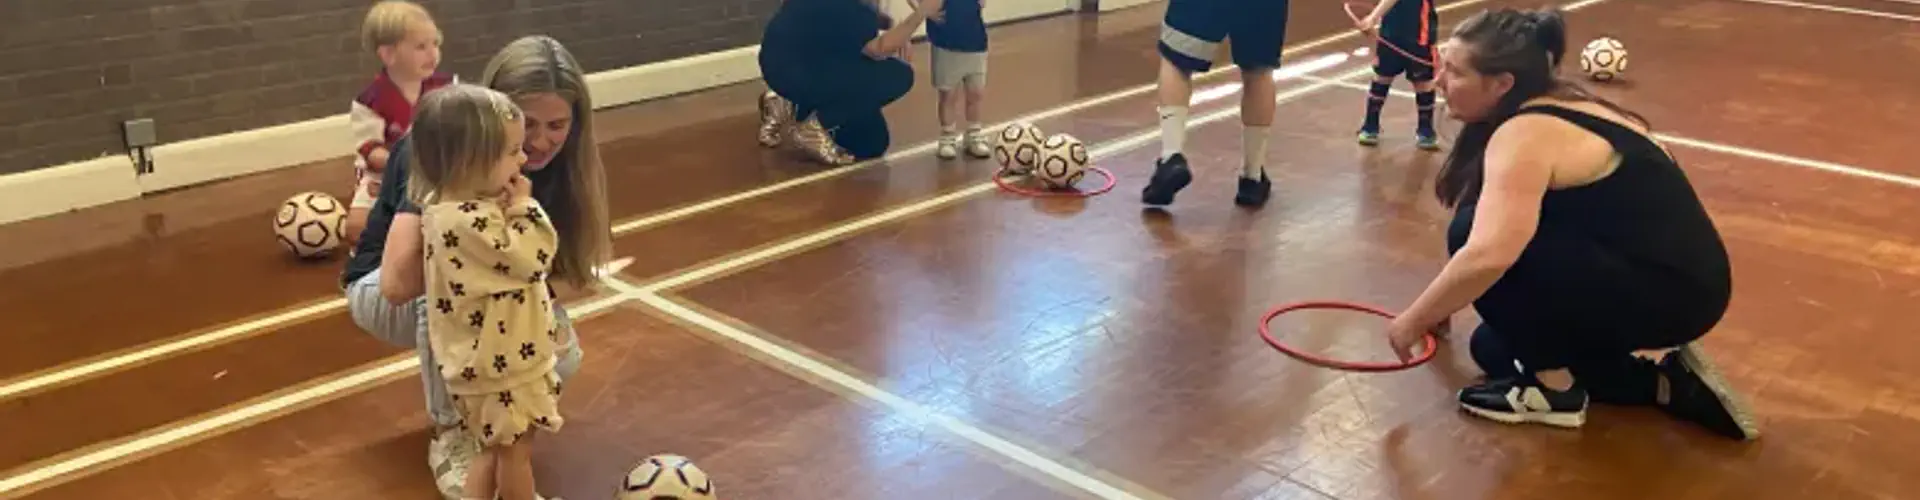 Football Coaching For Children